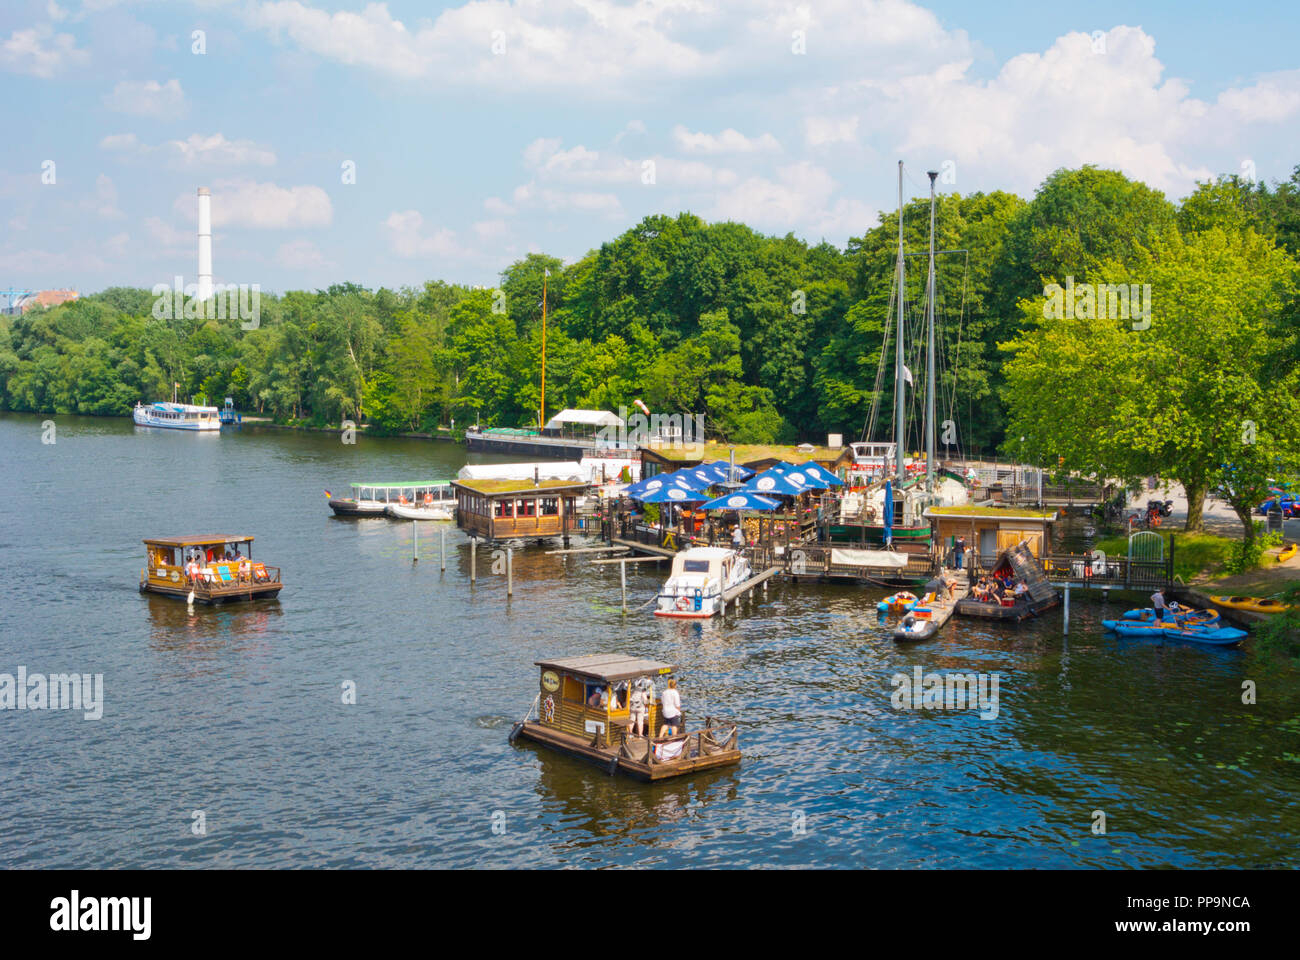 Poetensteig, boat piers and restaurants, River Spree, Treptower Park, Alt-Treptow, Berlin, Germany Stock Photo